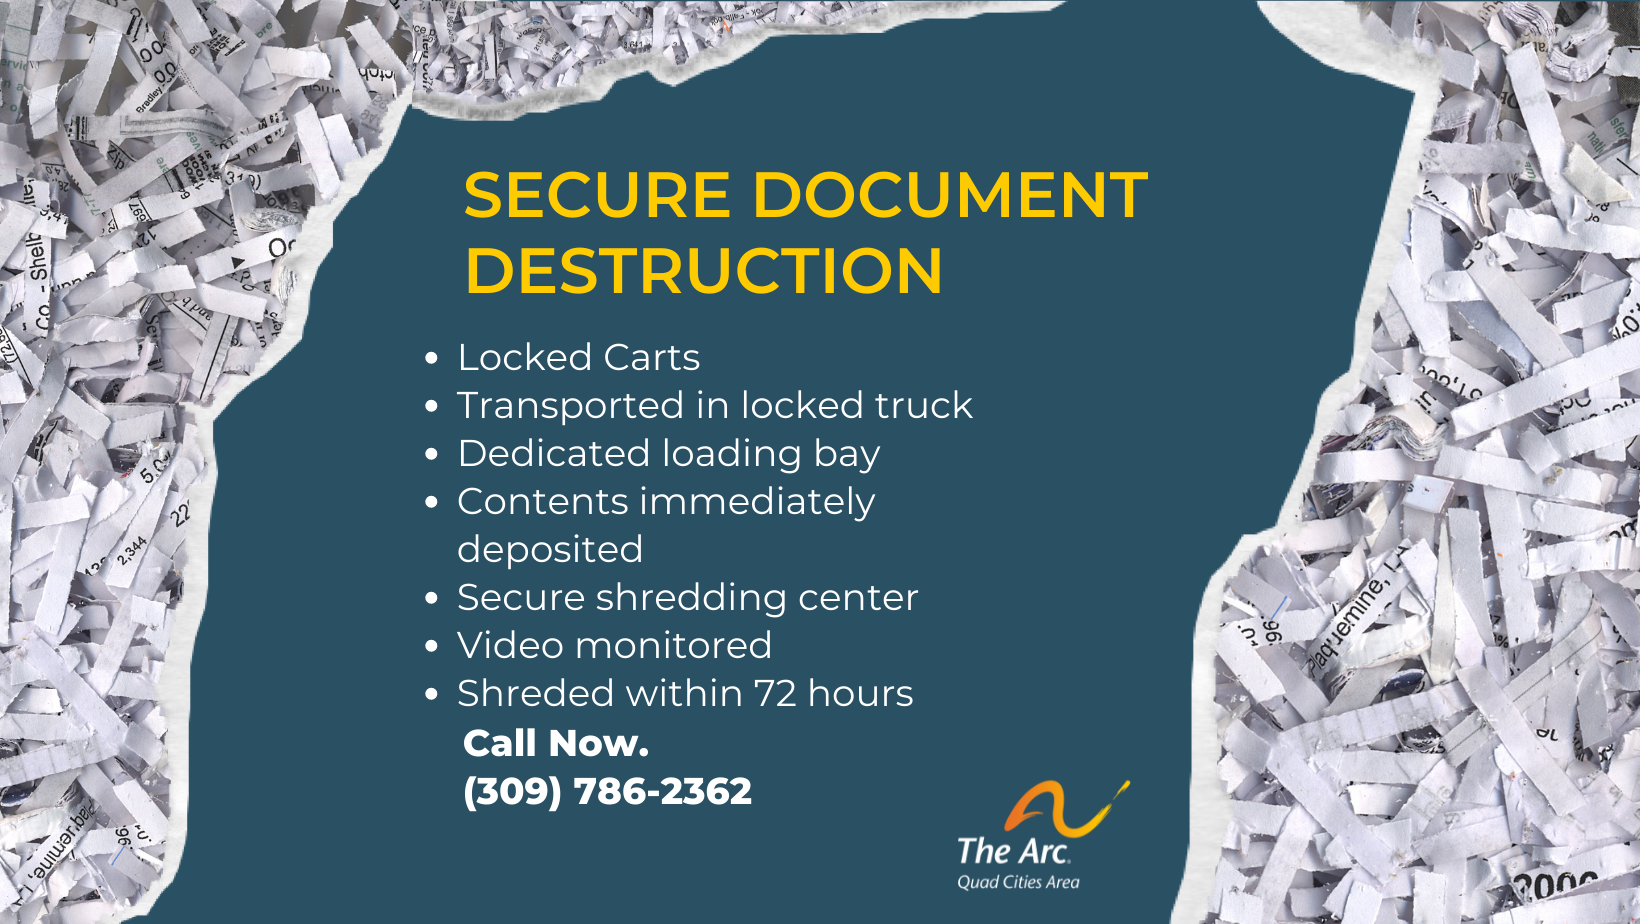 secure document destruction image with shredded paper